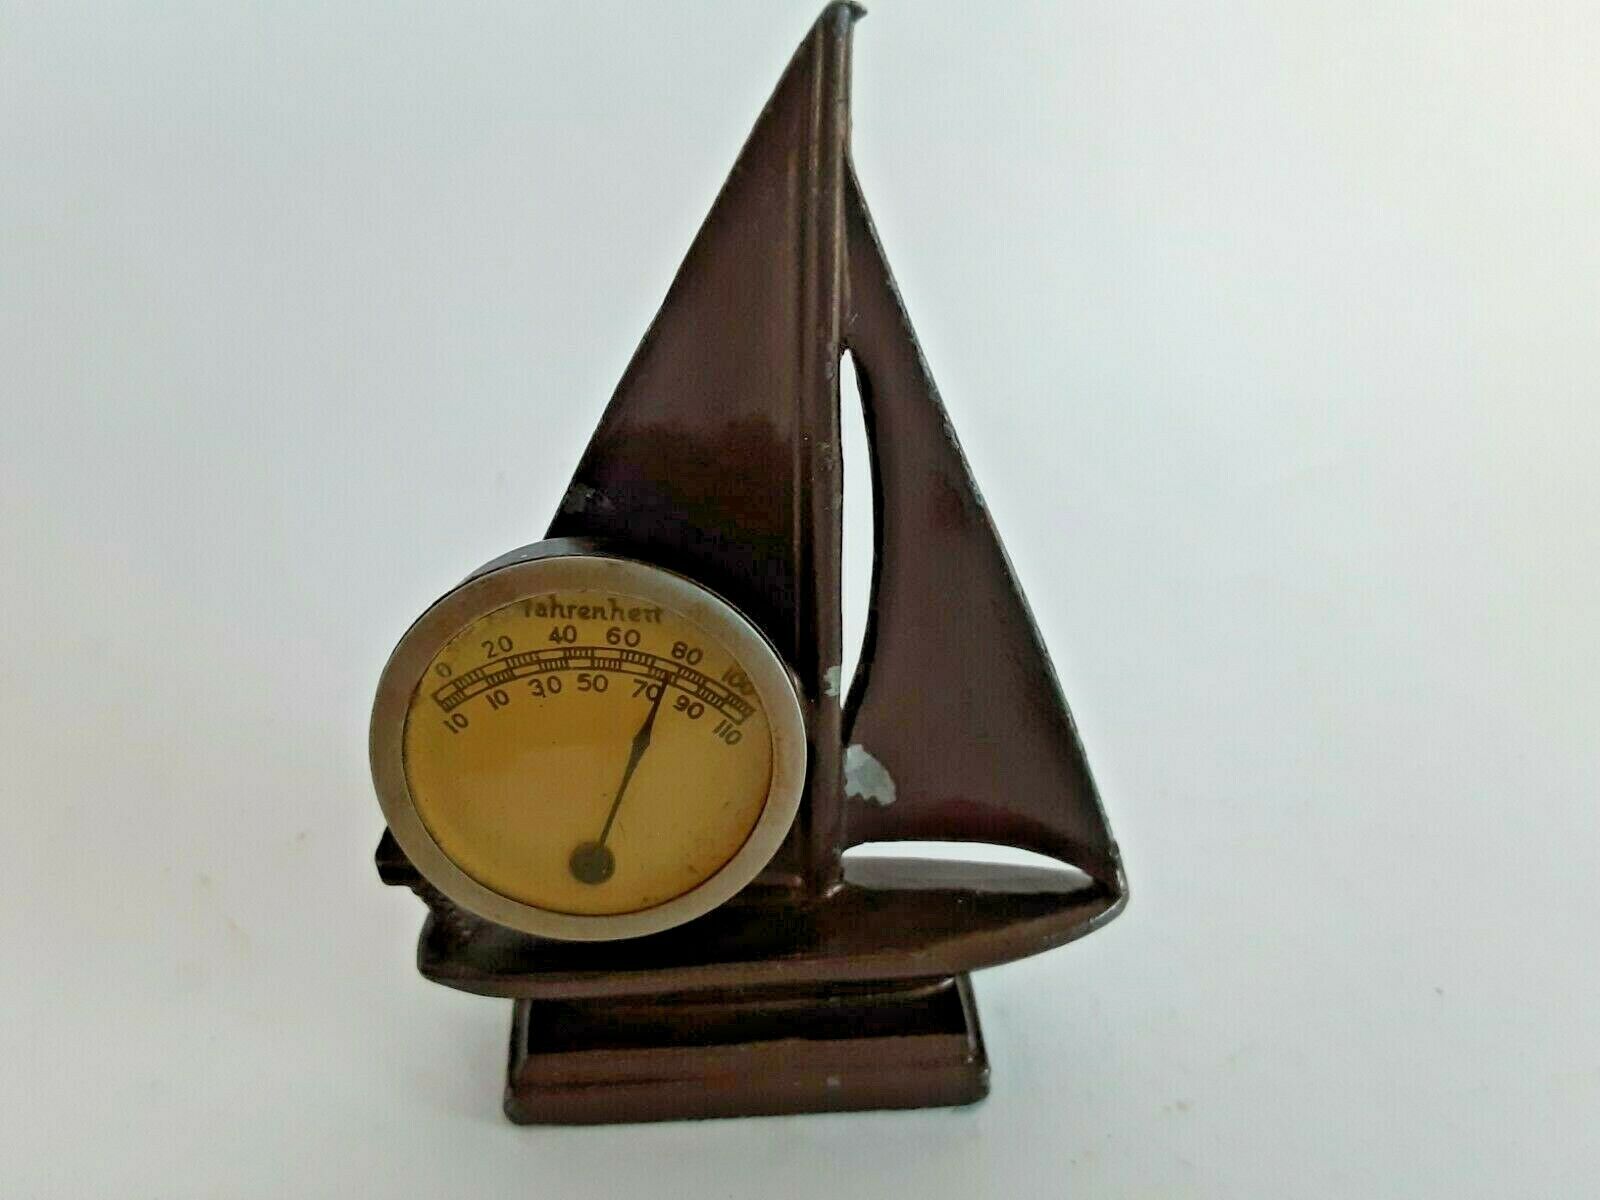 Vtg. Crescent Art Novelties Miniture Sailboat Farenheit Table Top Thermometer